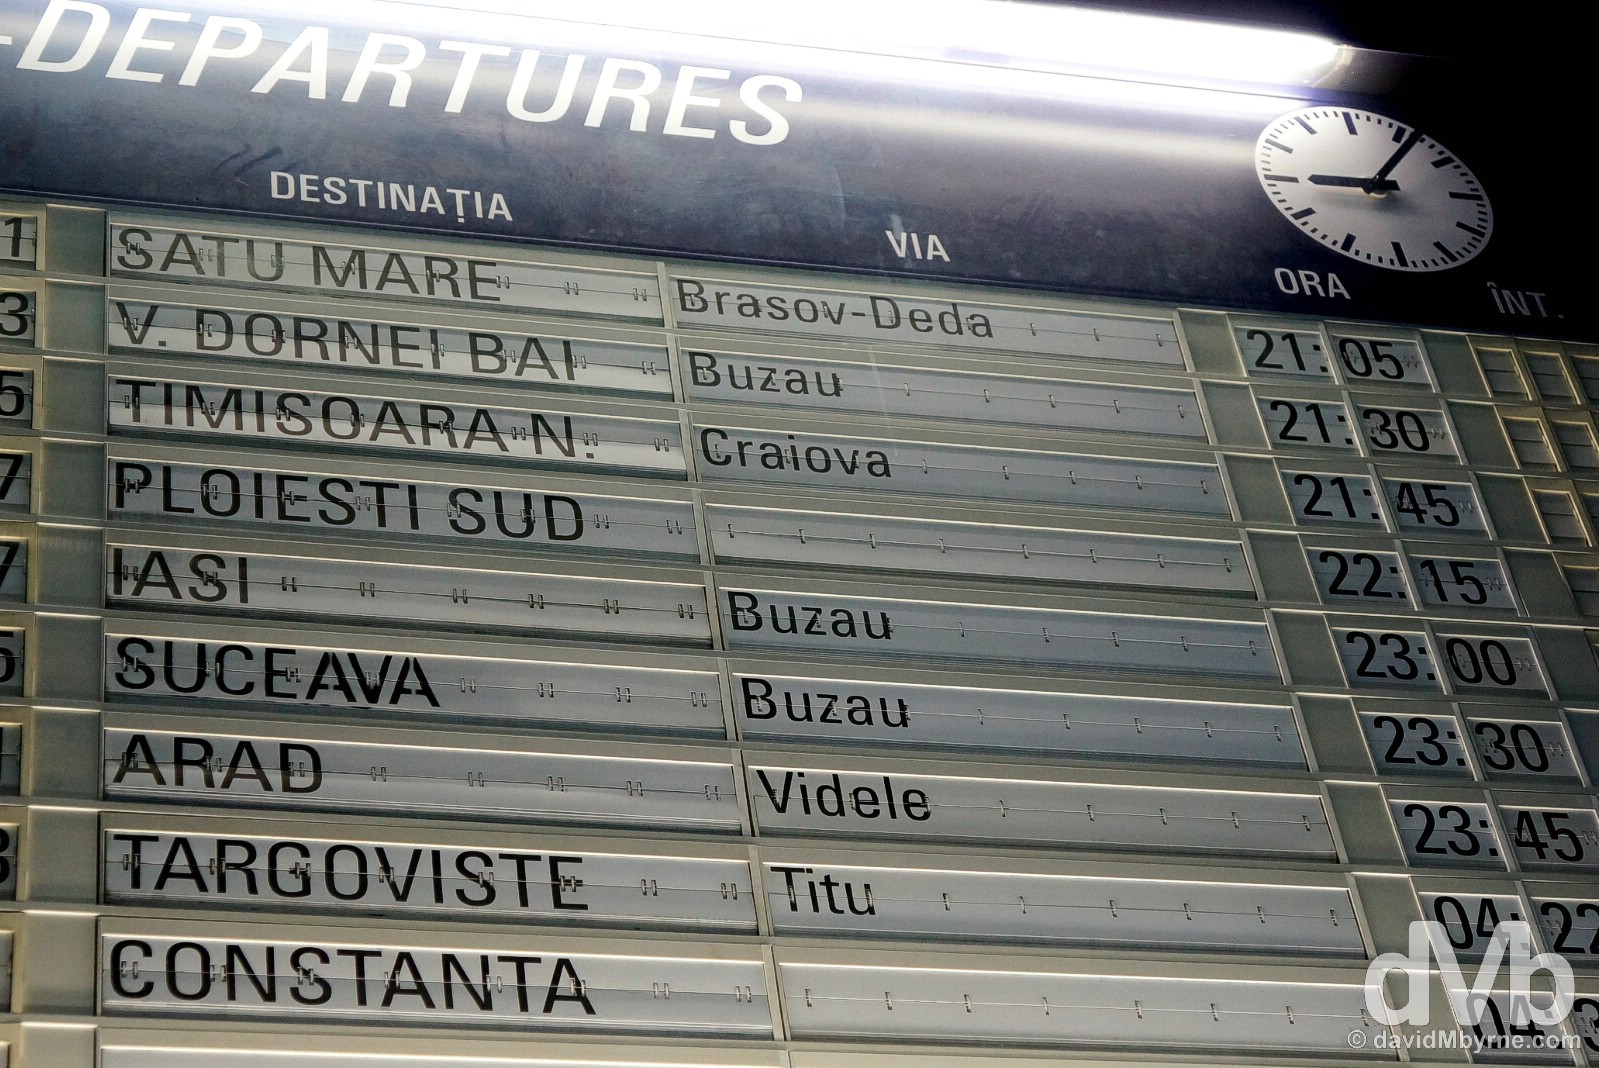 Night train to Belgrade, Serbia. The departures board in Gara de Nord, Bucharest, Romania. April 2, 2015.